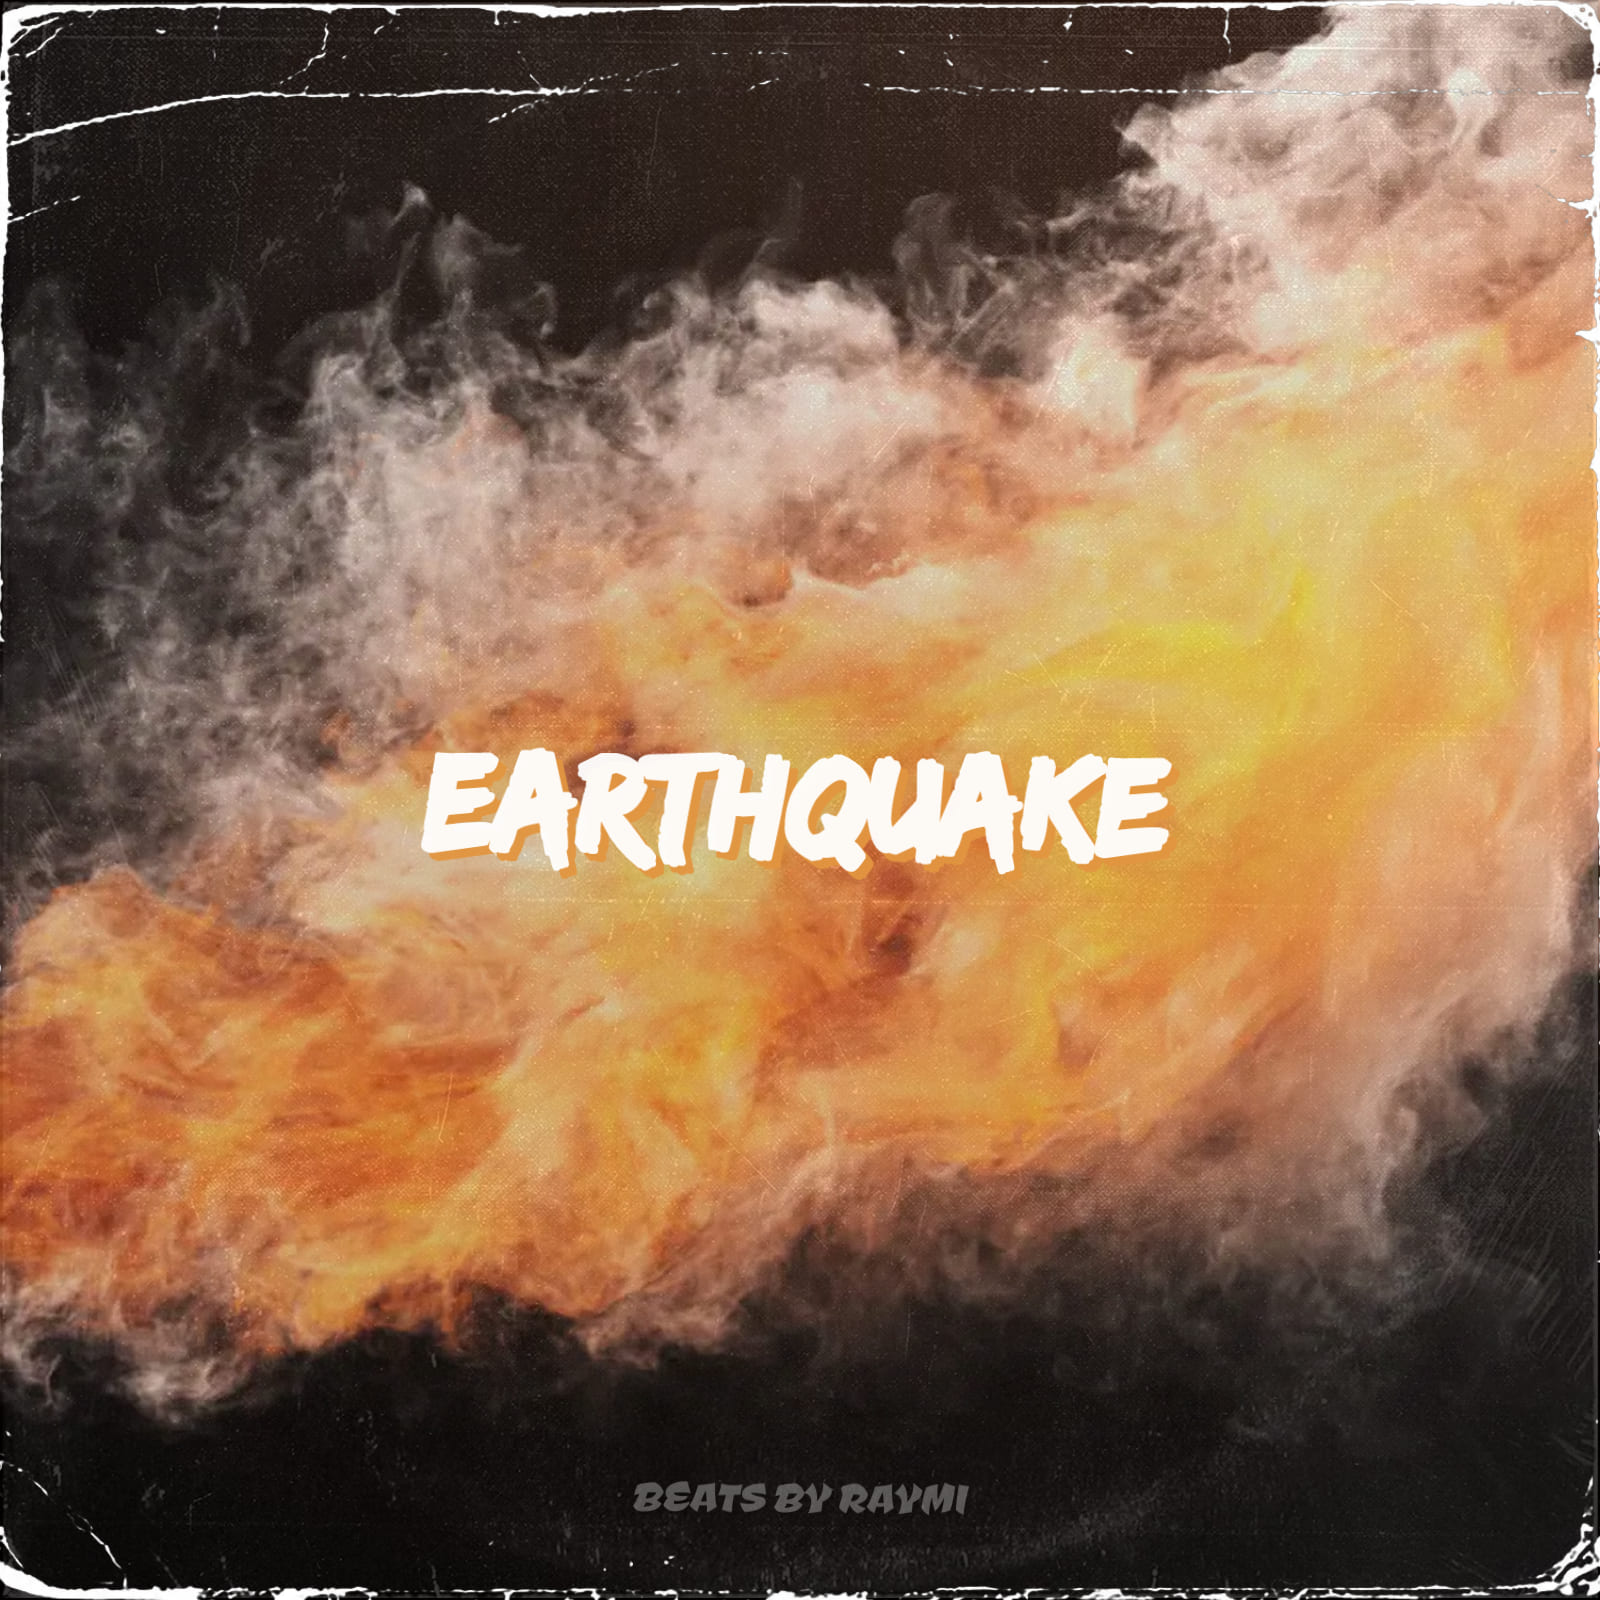 обложка бита, Raymi, музыка, cover, Earthquake (басовый, энергичный бит)